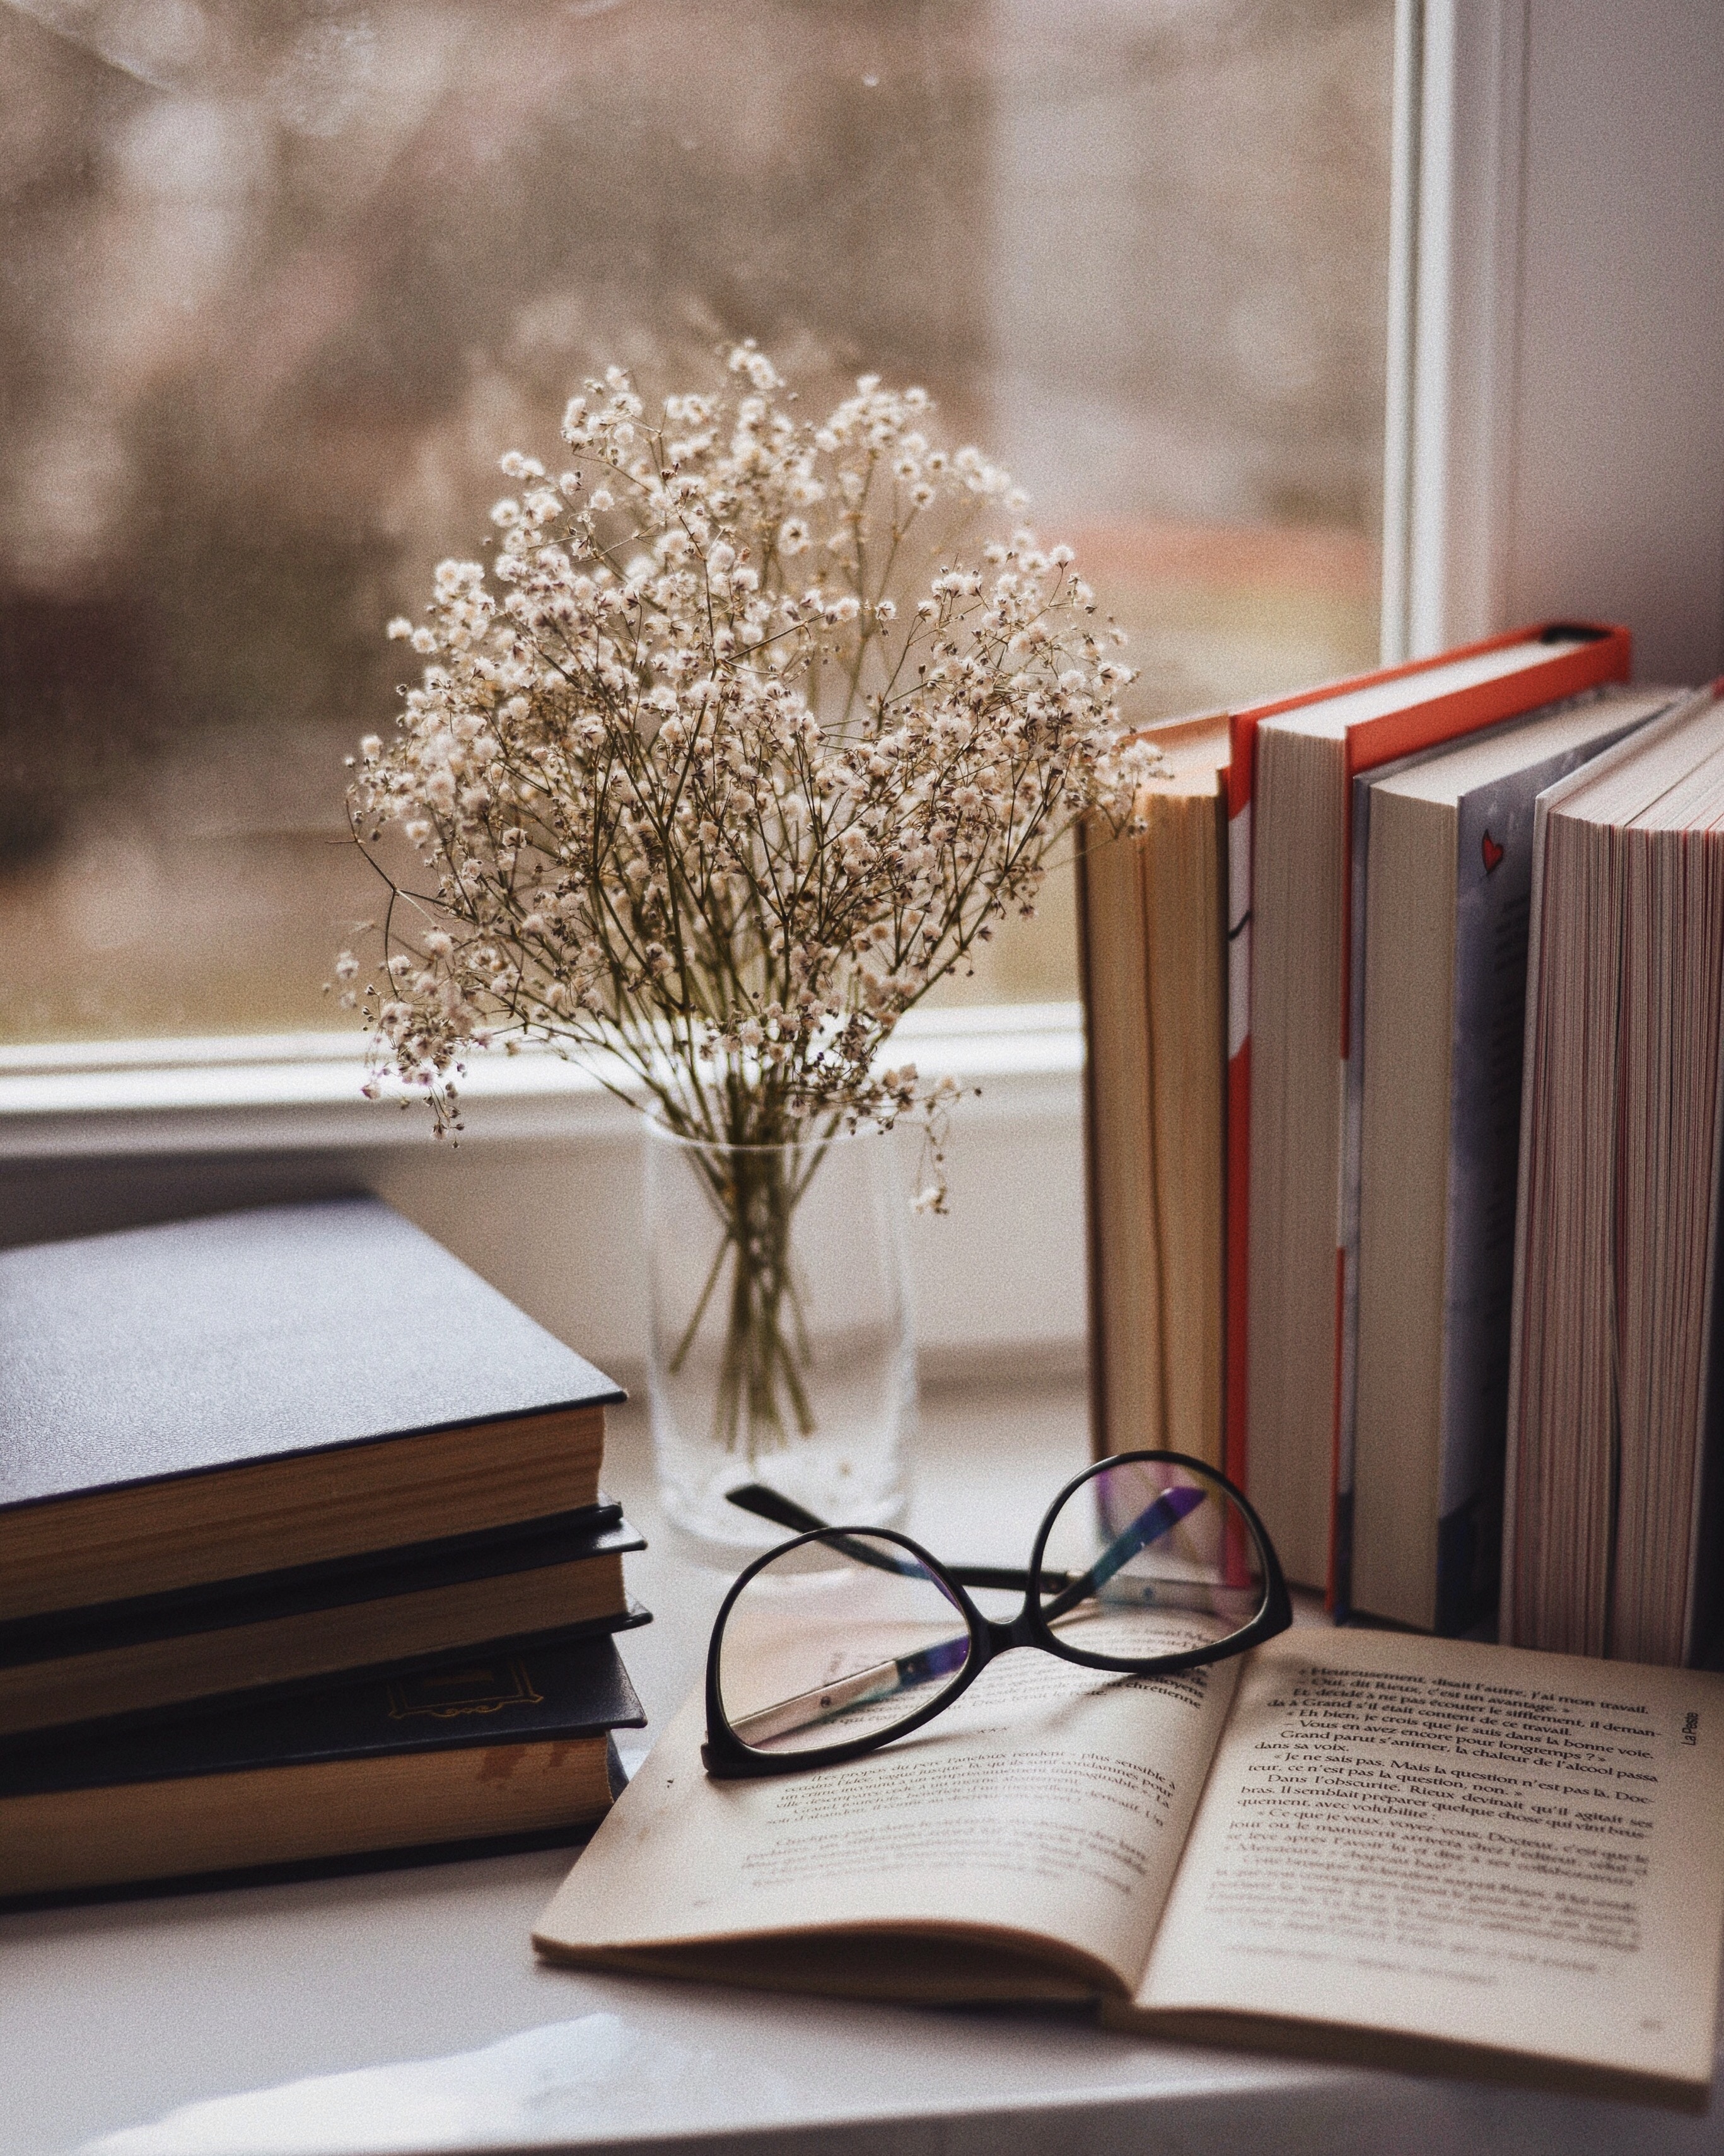 books, glasses, spectacles, flowers, miscellanea, miscellaneous, window, vase, window sill, windowsill